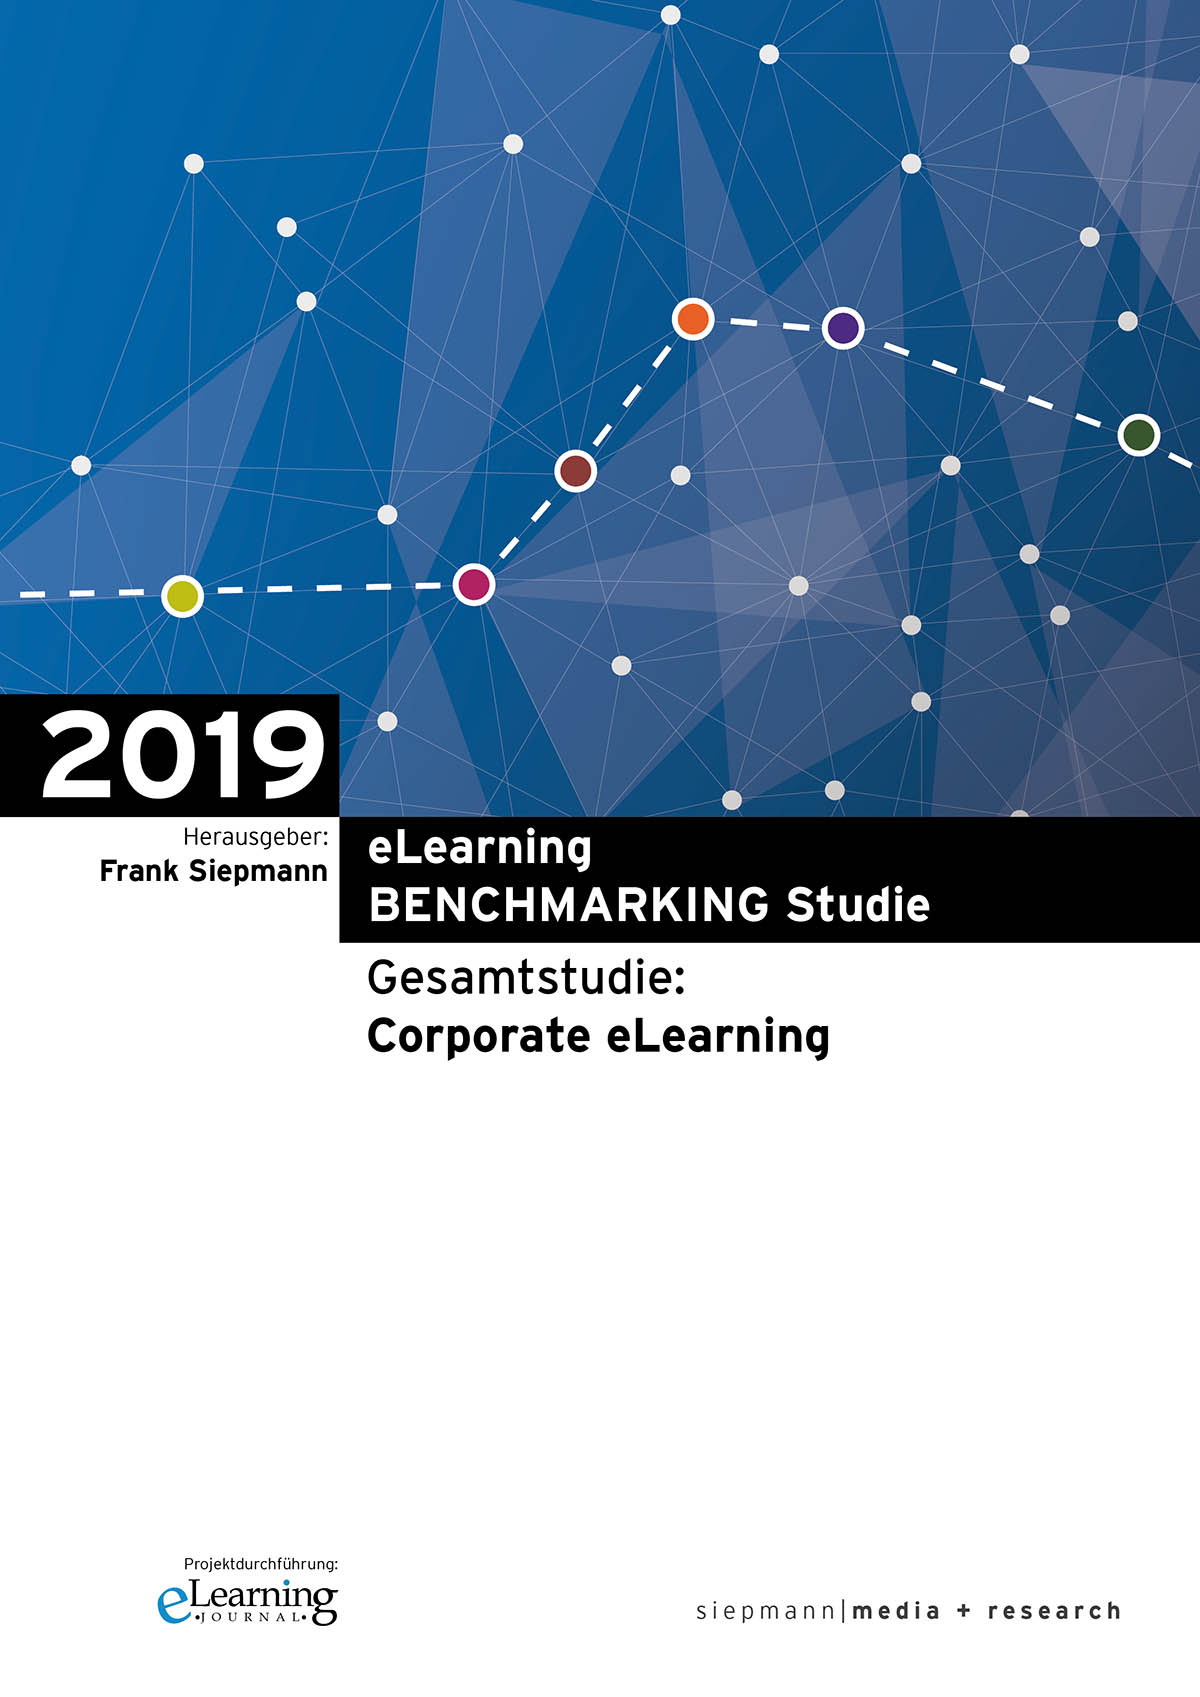 eLearning BENCHMARKING Studie 2019